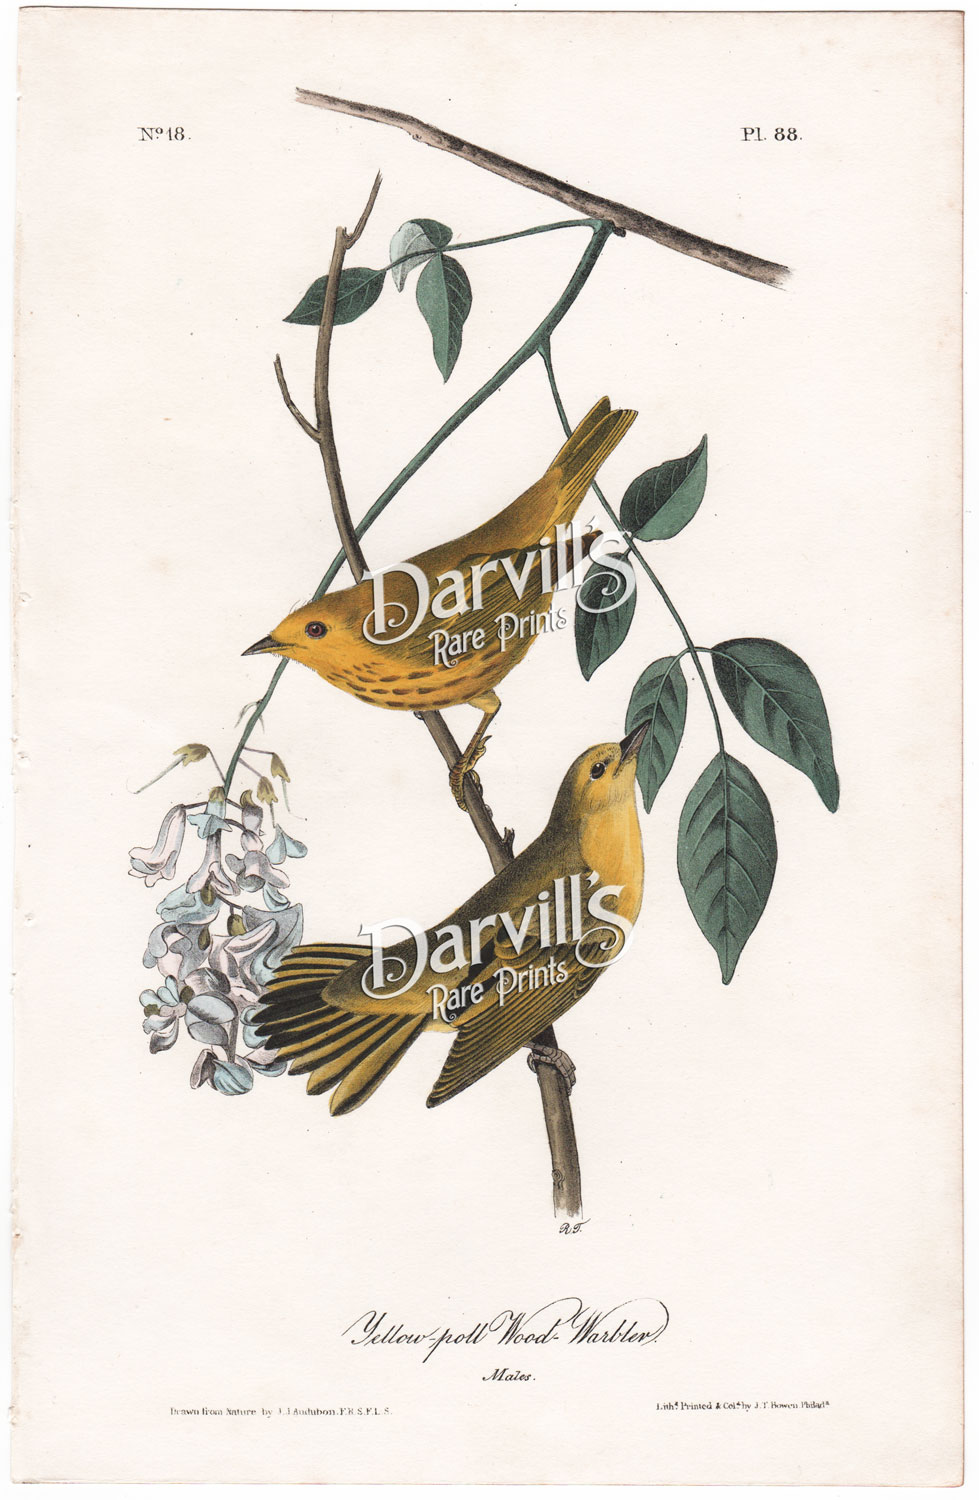 Yellow Poll Wood Warbler plate 86 Audubon first edition octavo